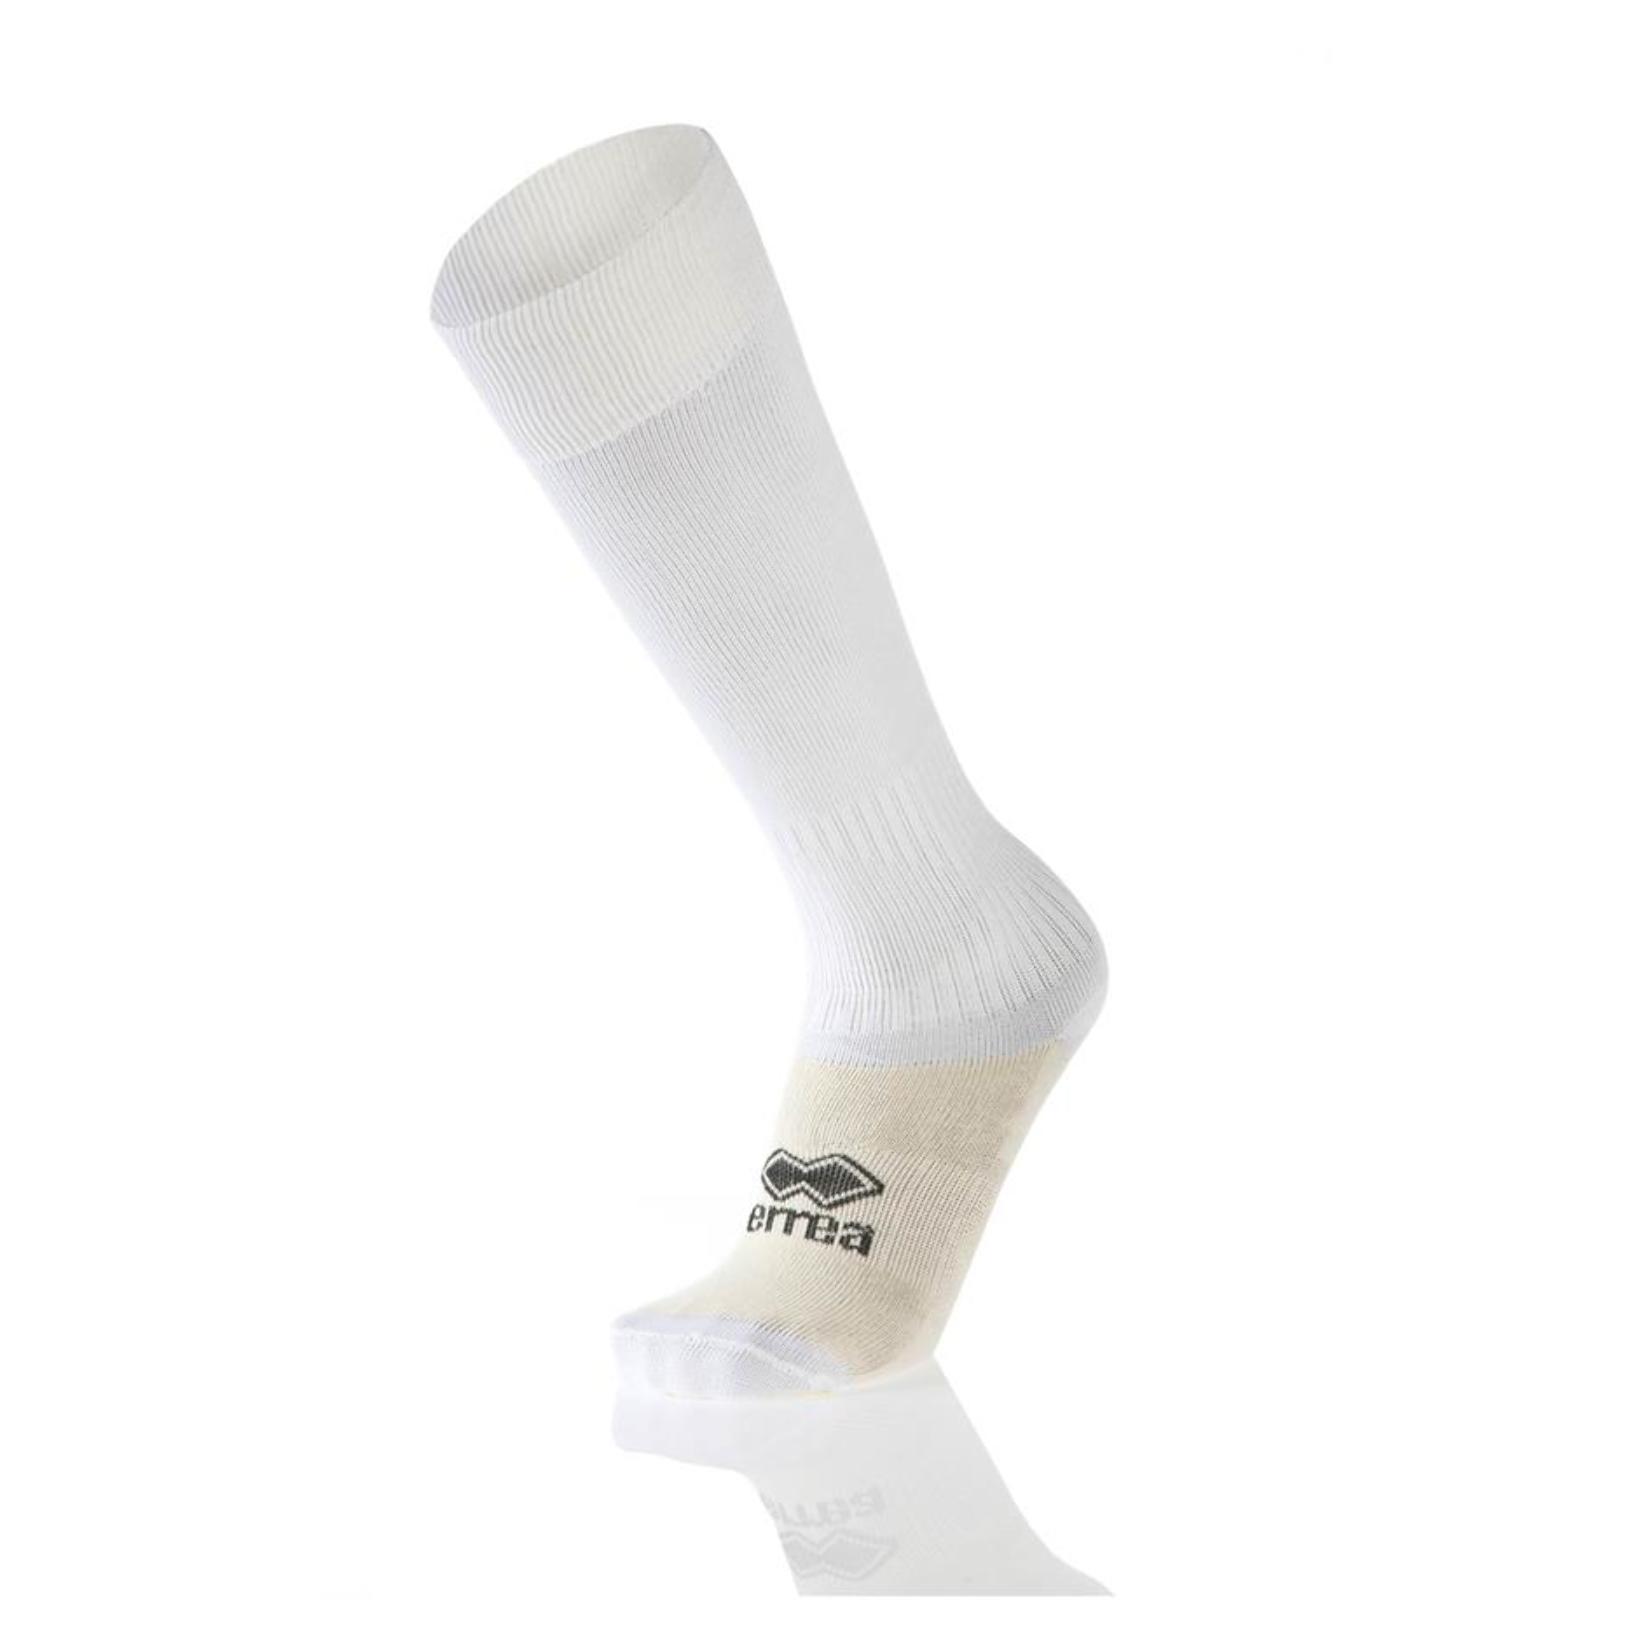 Errea Adult Technical Football Socks in Grey/White 